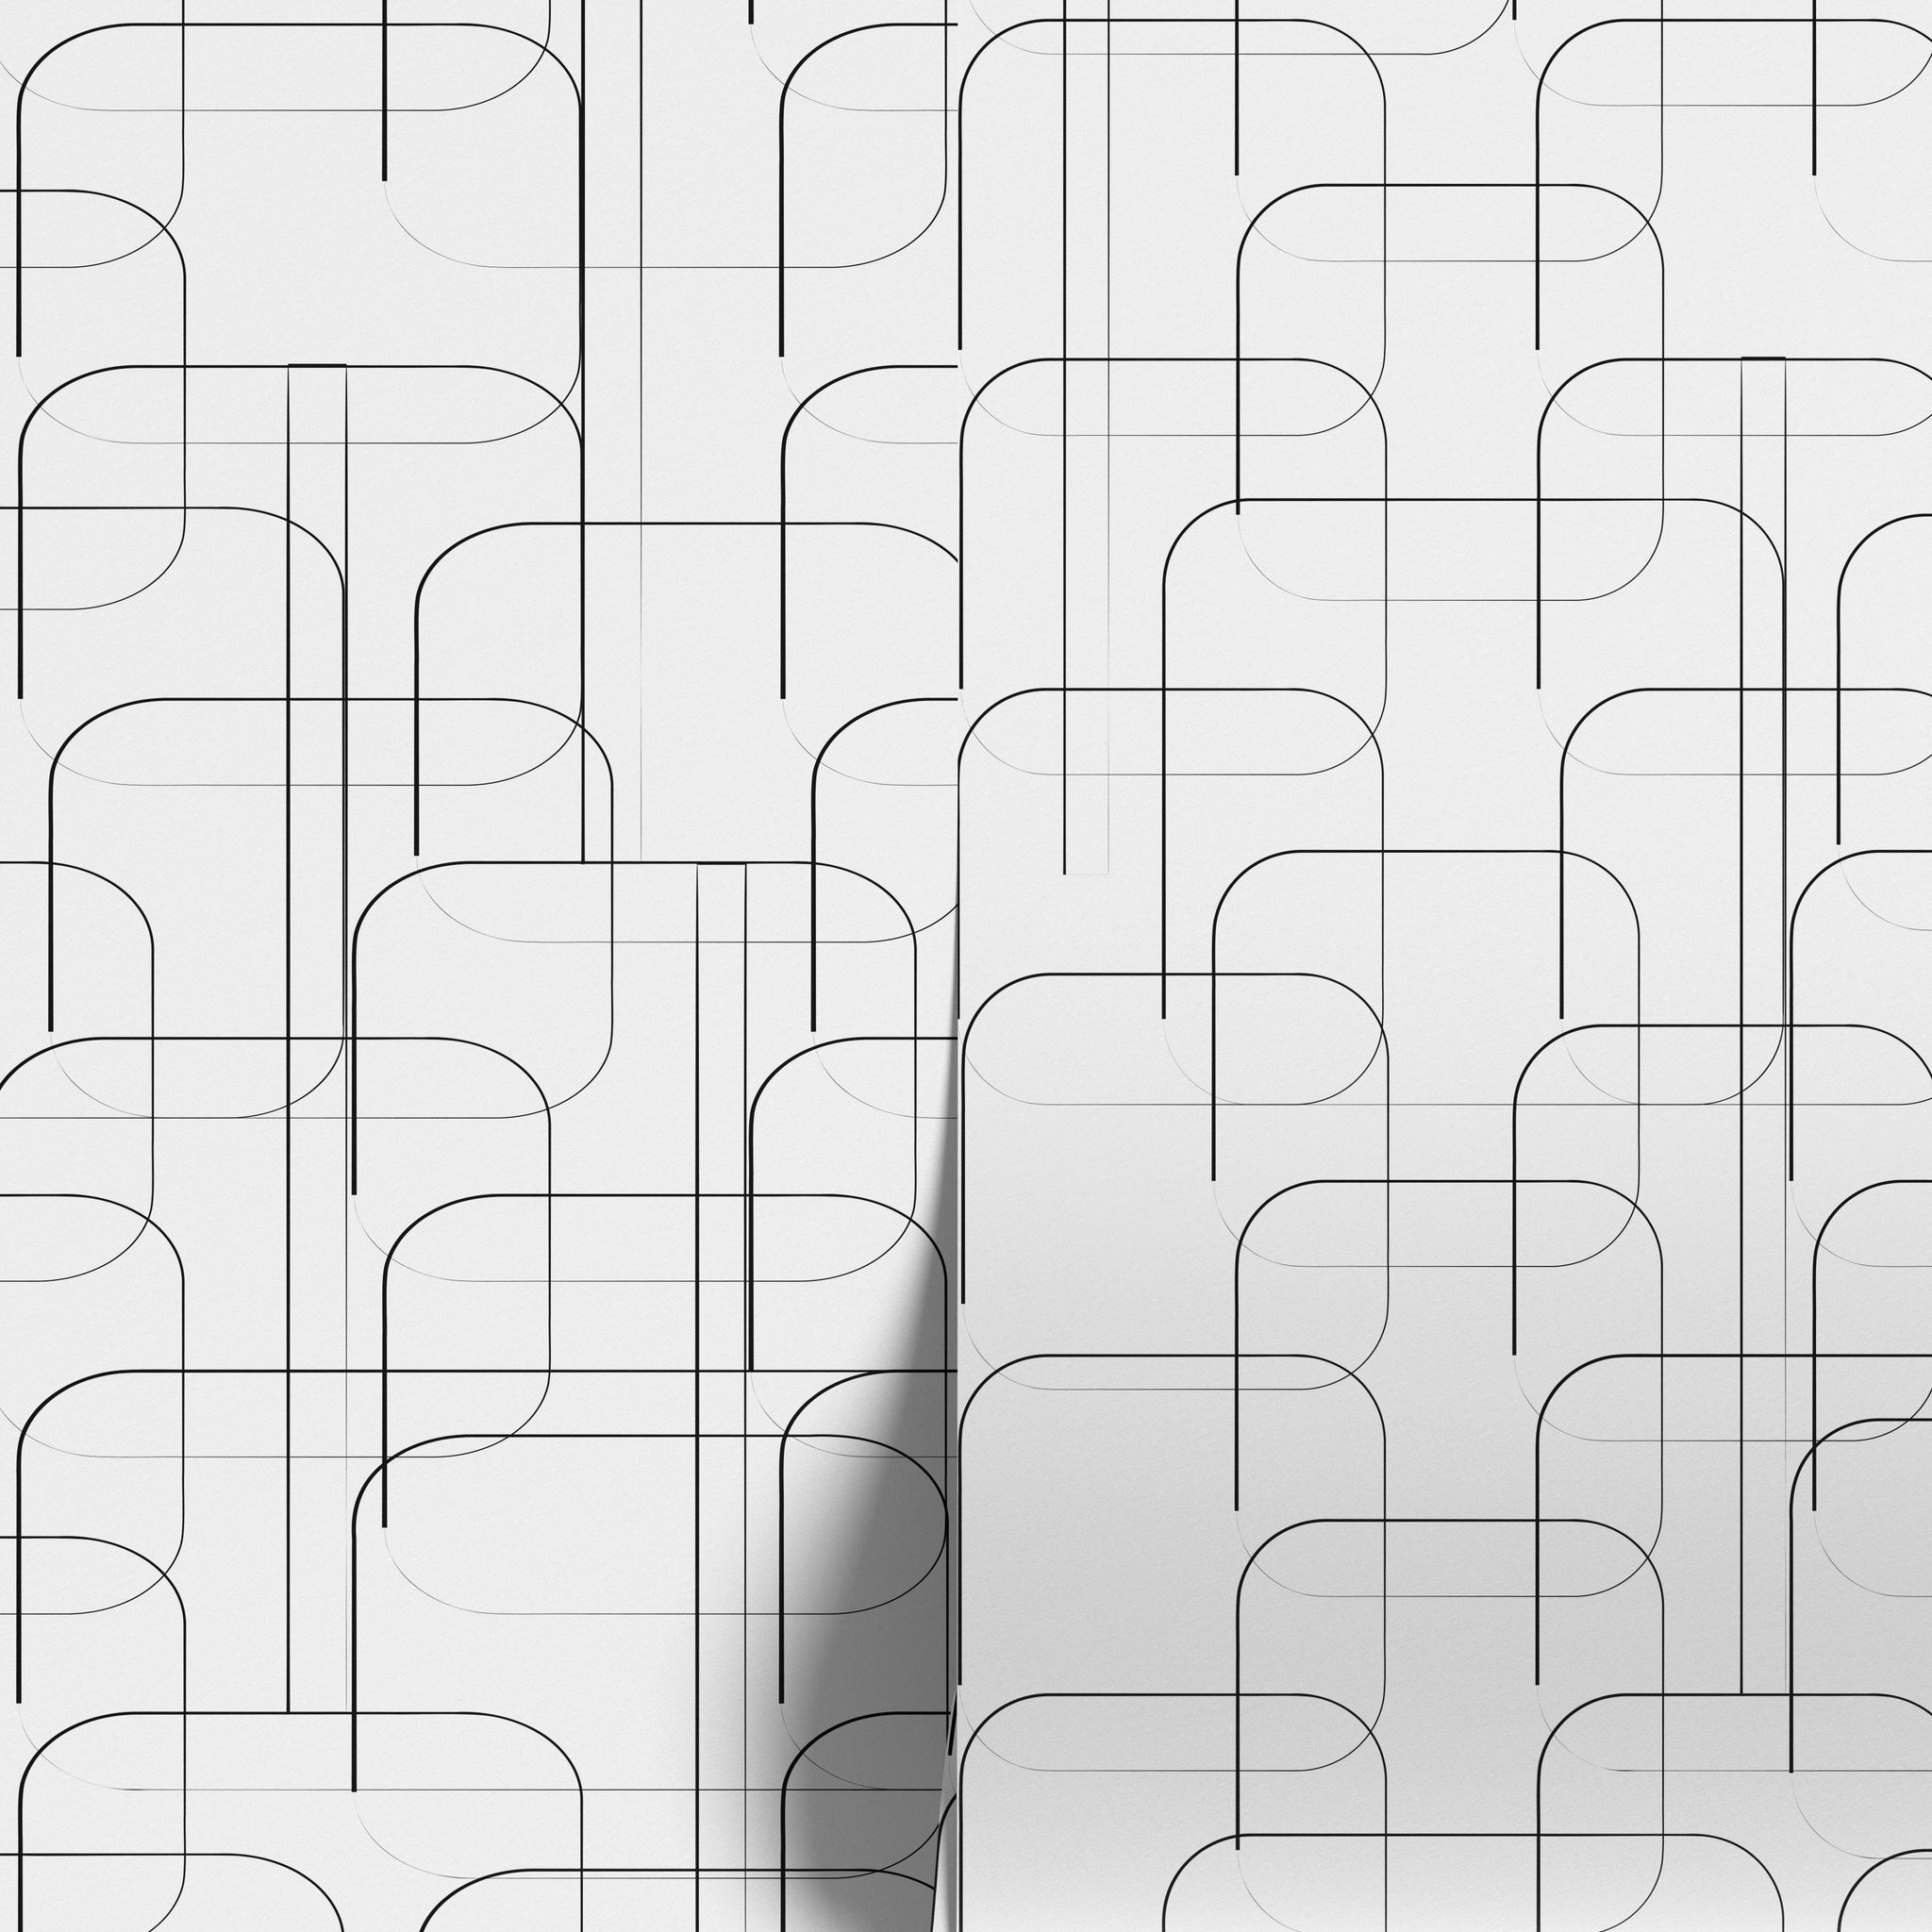 Self-Adhesive Wallpaper - Between the lines